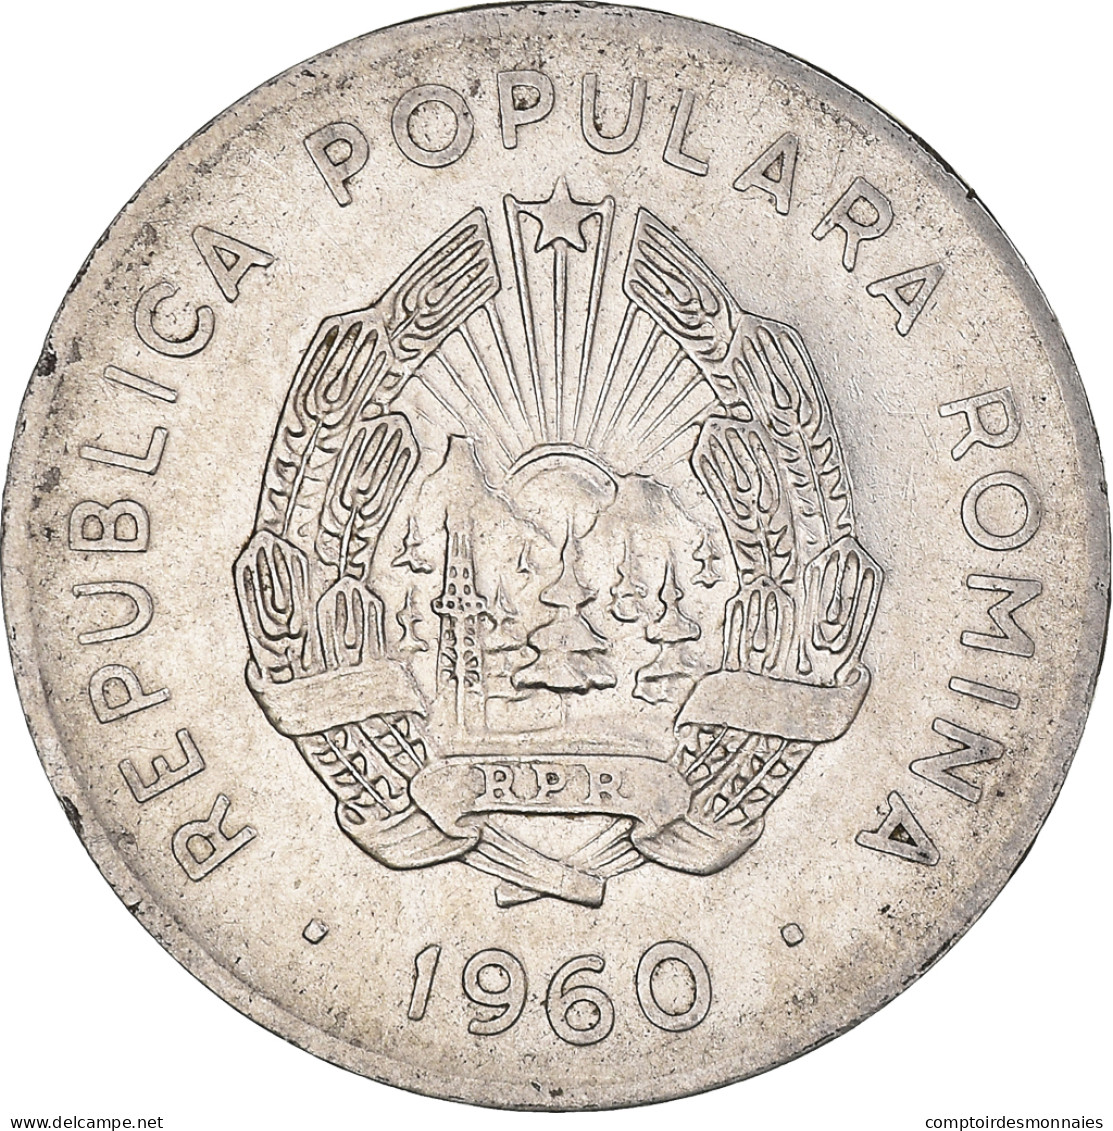 Monnaie, Roumanie, 25 Bani, 1960, TB+, Nickel Clad Steel, KM:88 - Rumänien